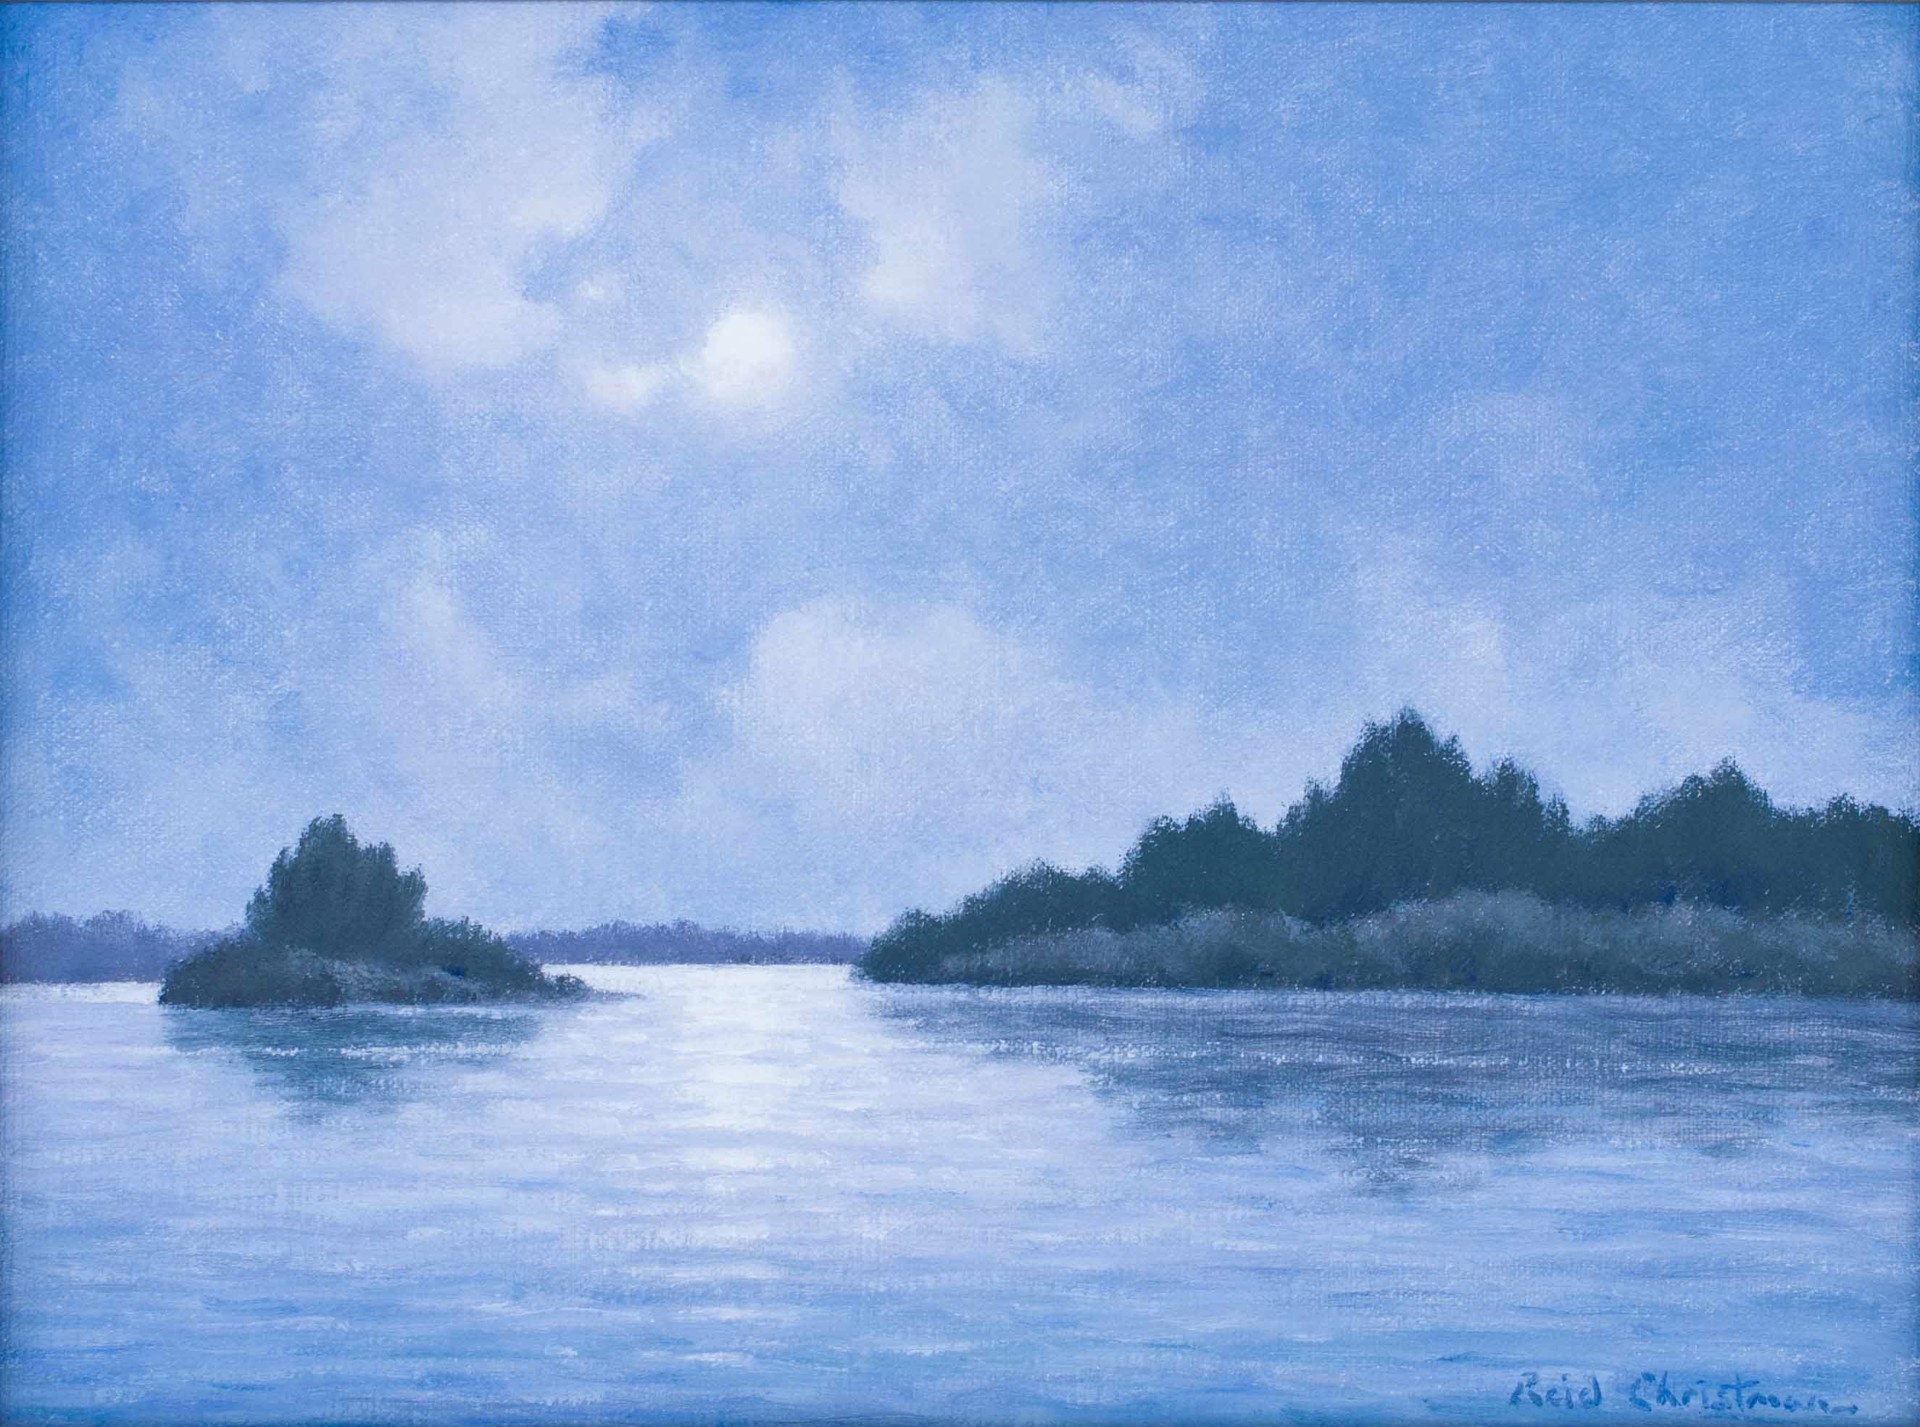 Moonrise by Reid Christman